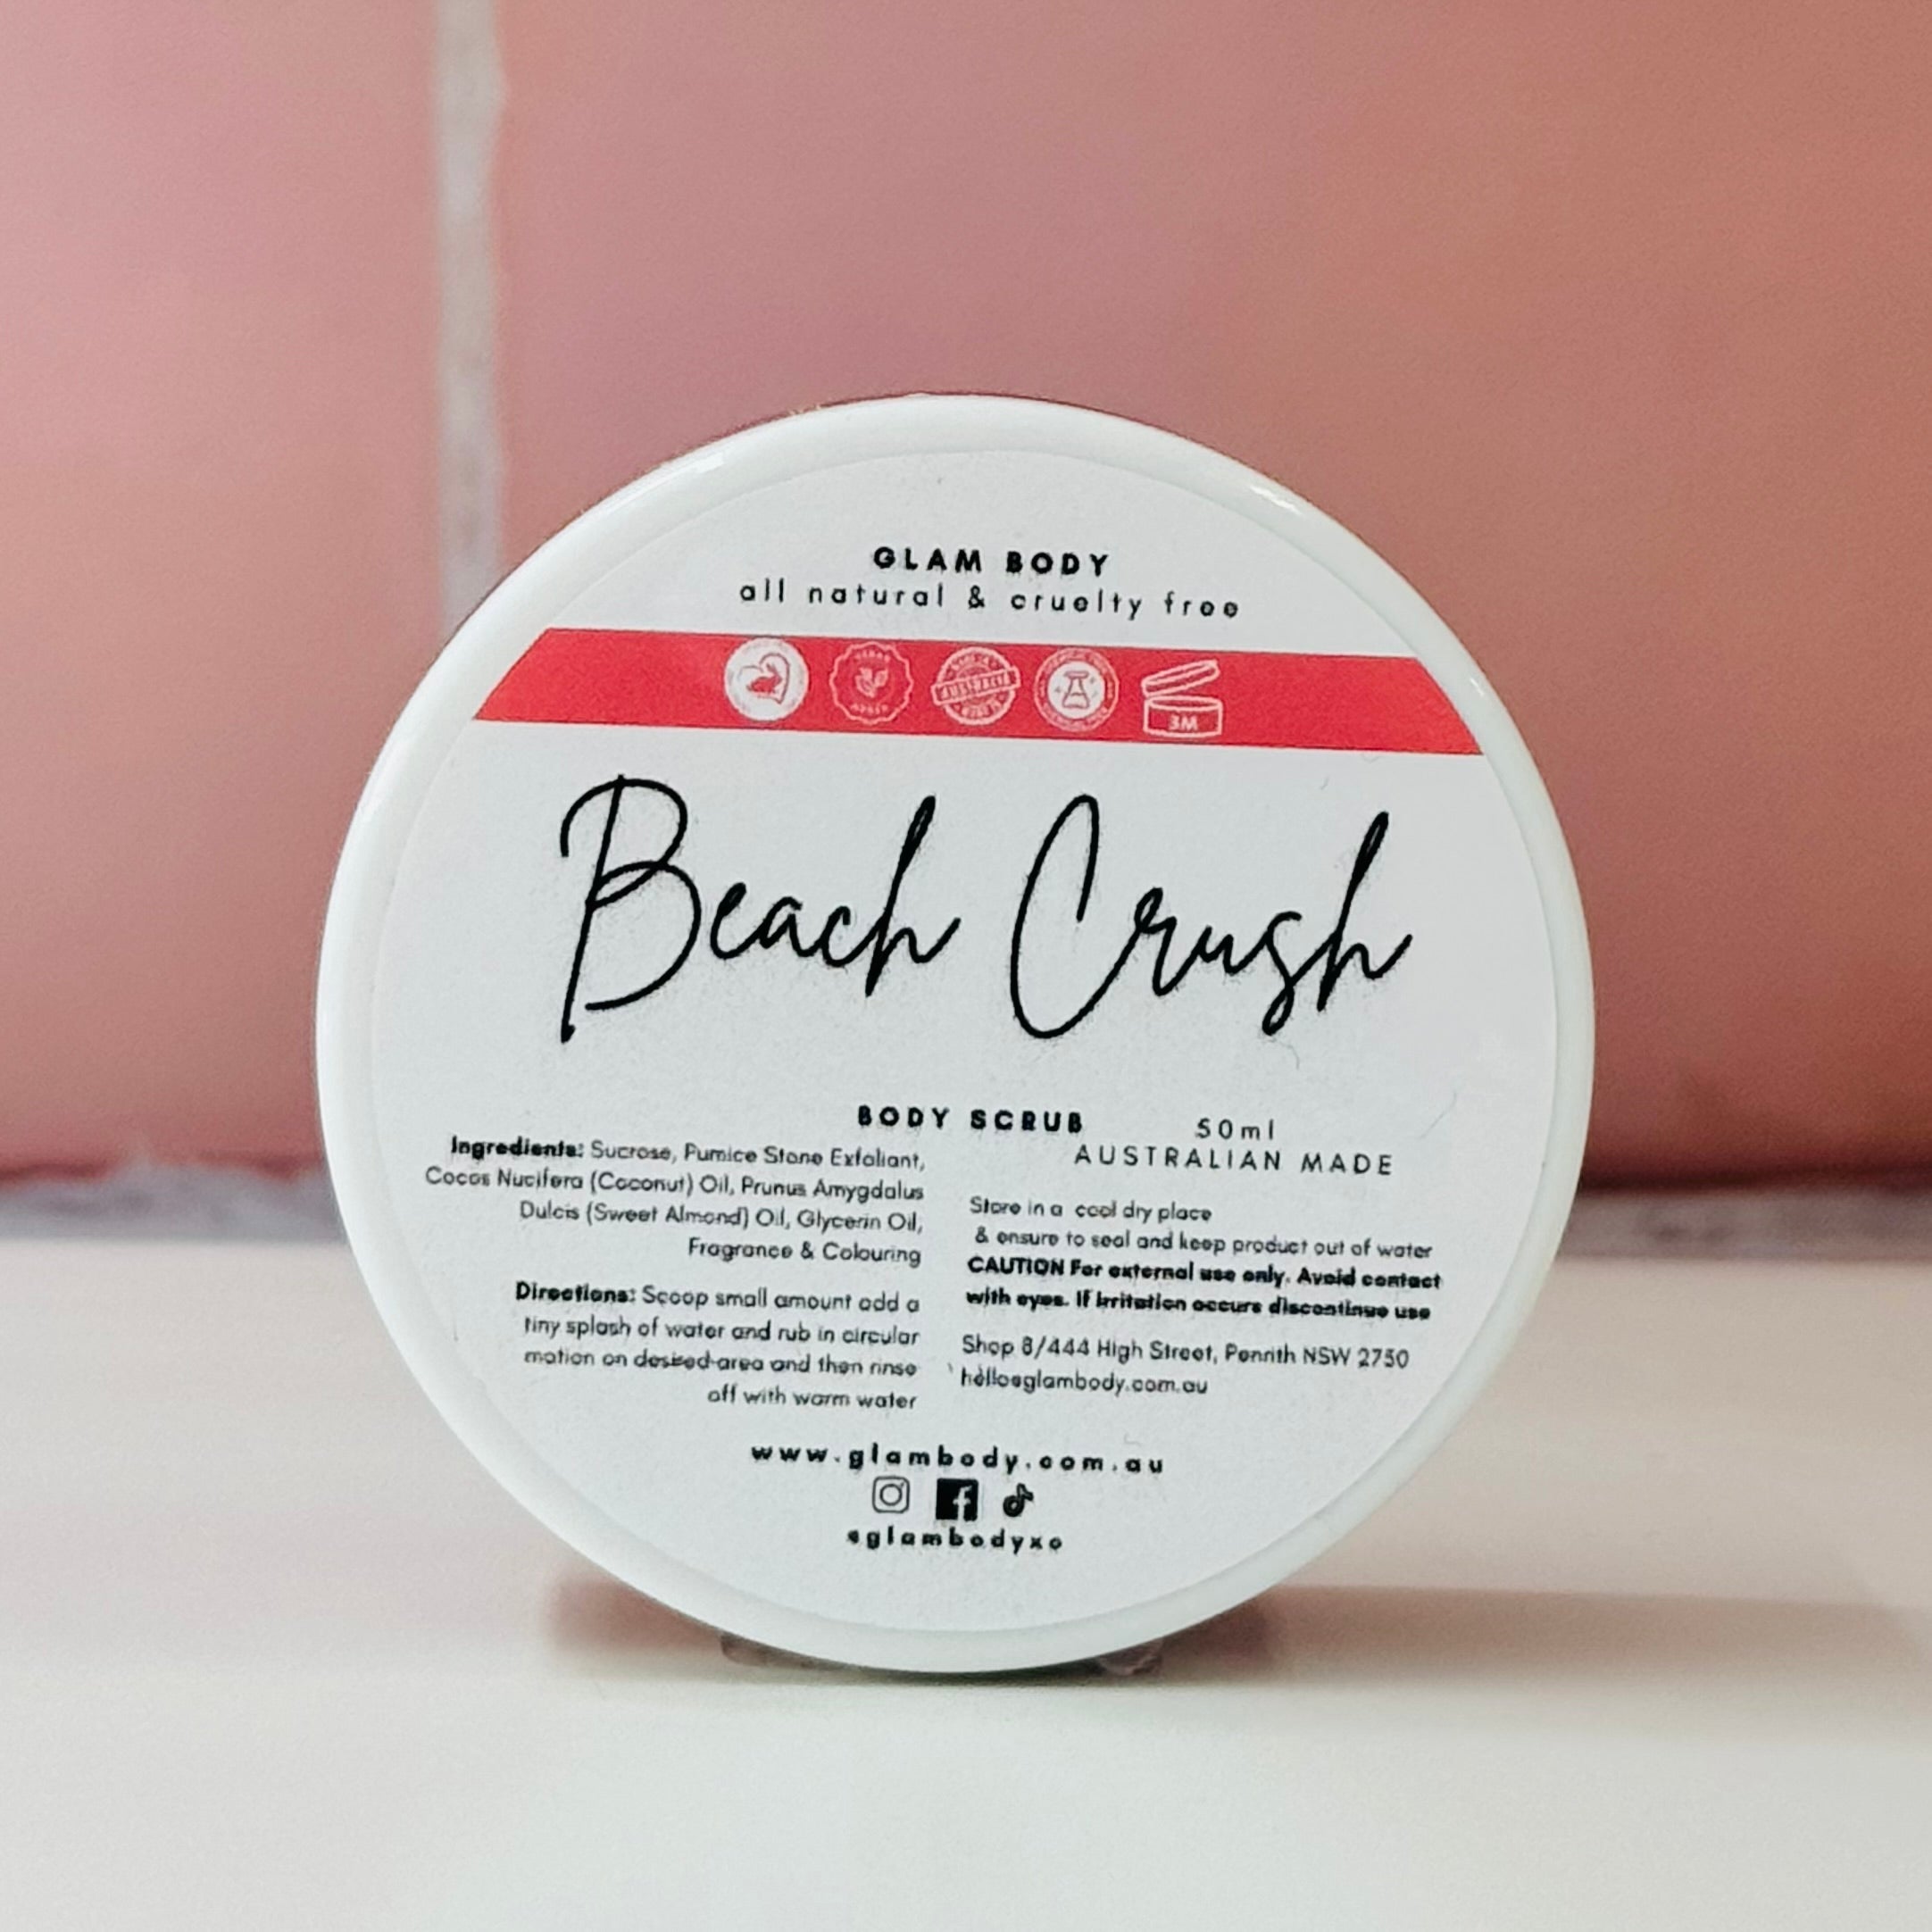 BEACH CRUSH BODY SCRUB - Glam Body